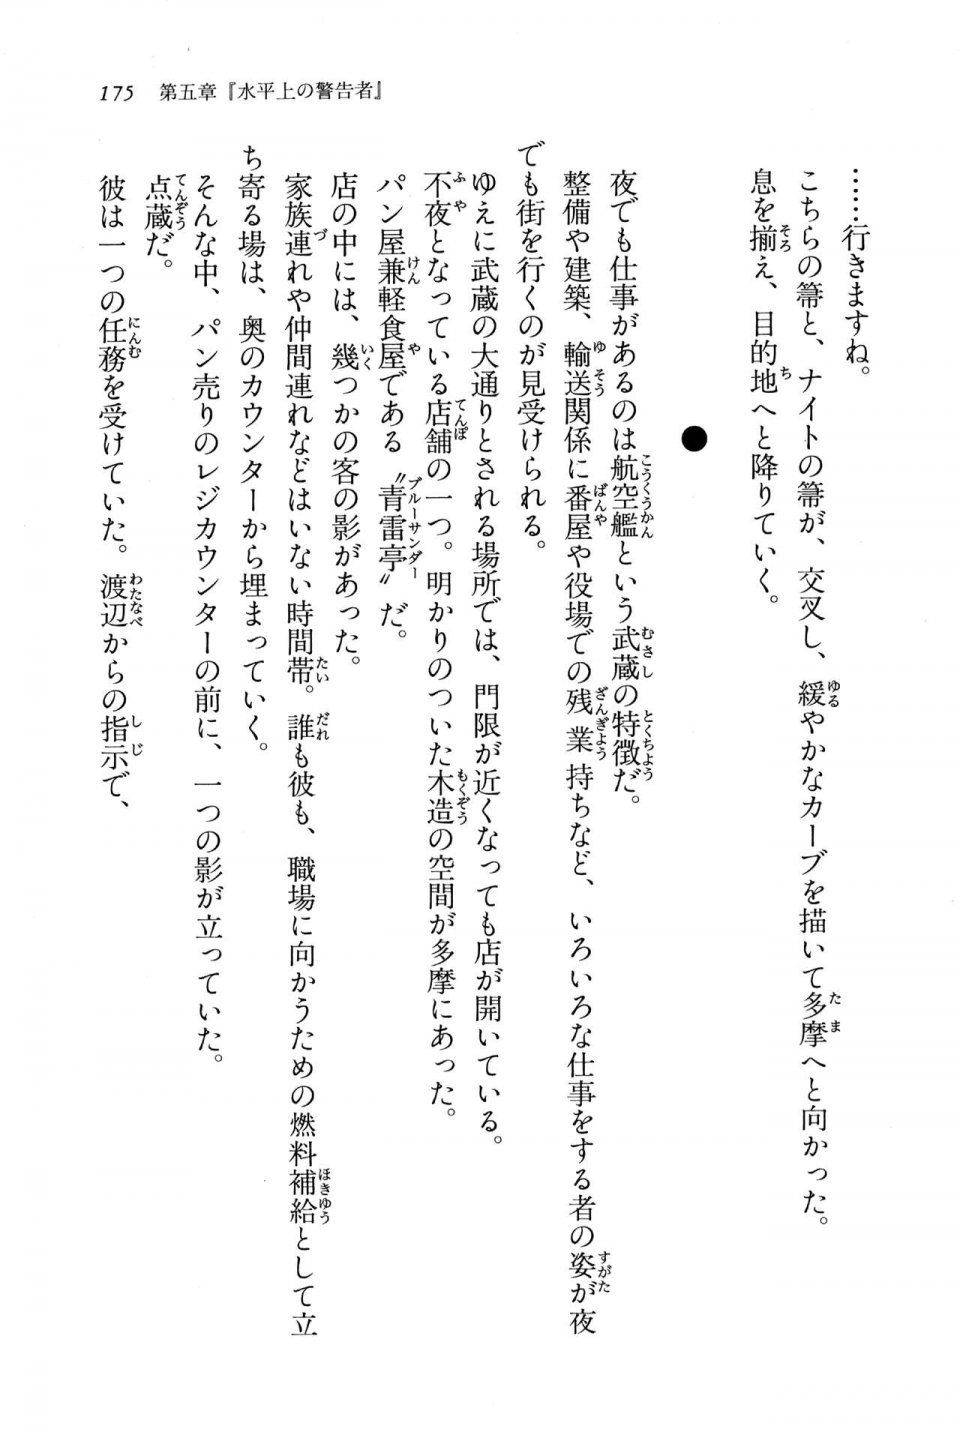 Kyoukai Senjou no Horizon BD Special Mininovel Vol 7(4A) - Photo #179